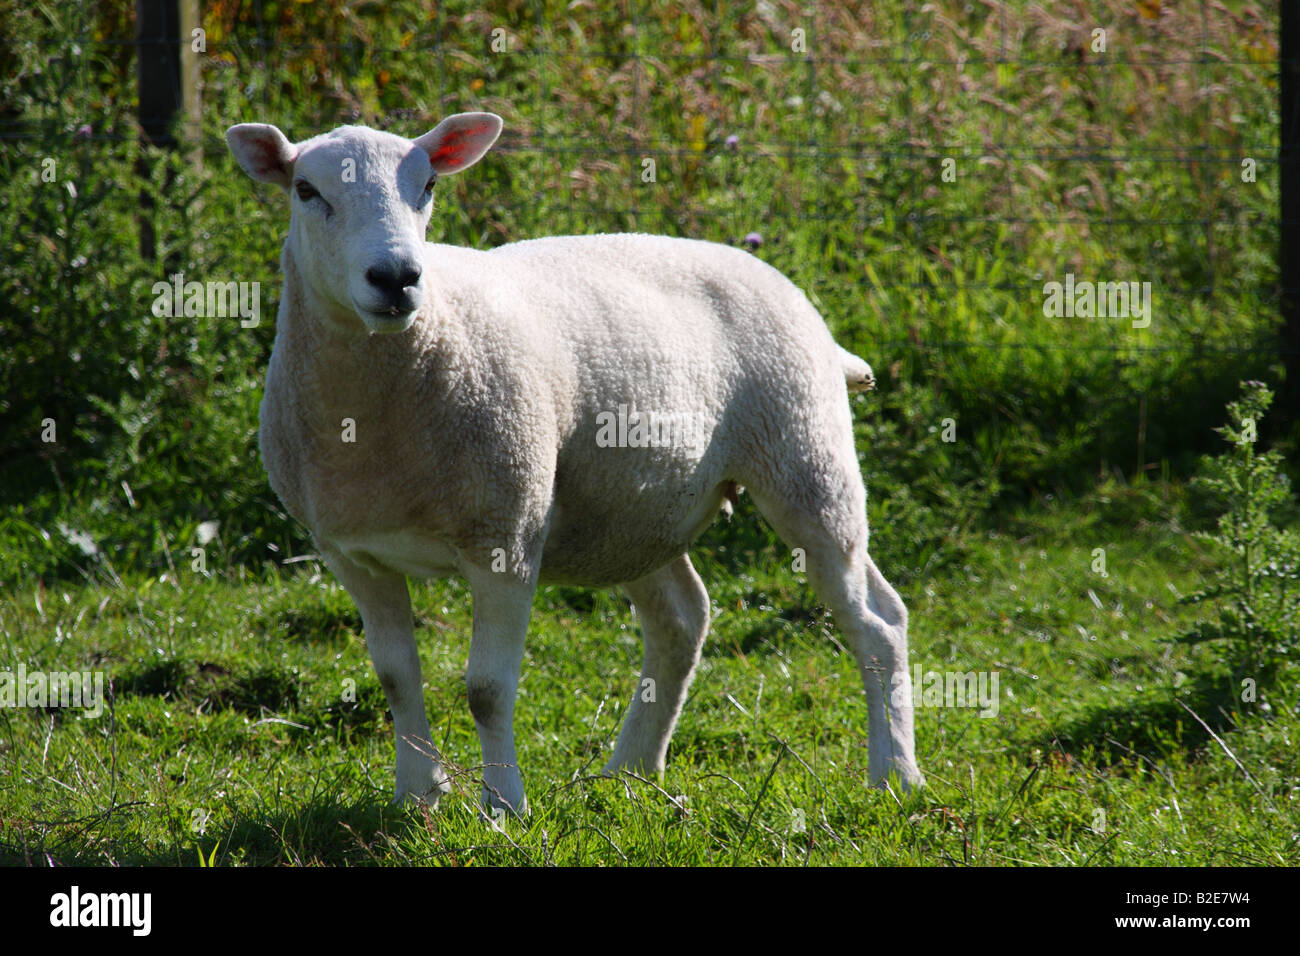 Sheep in field Stock Photo